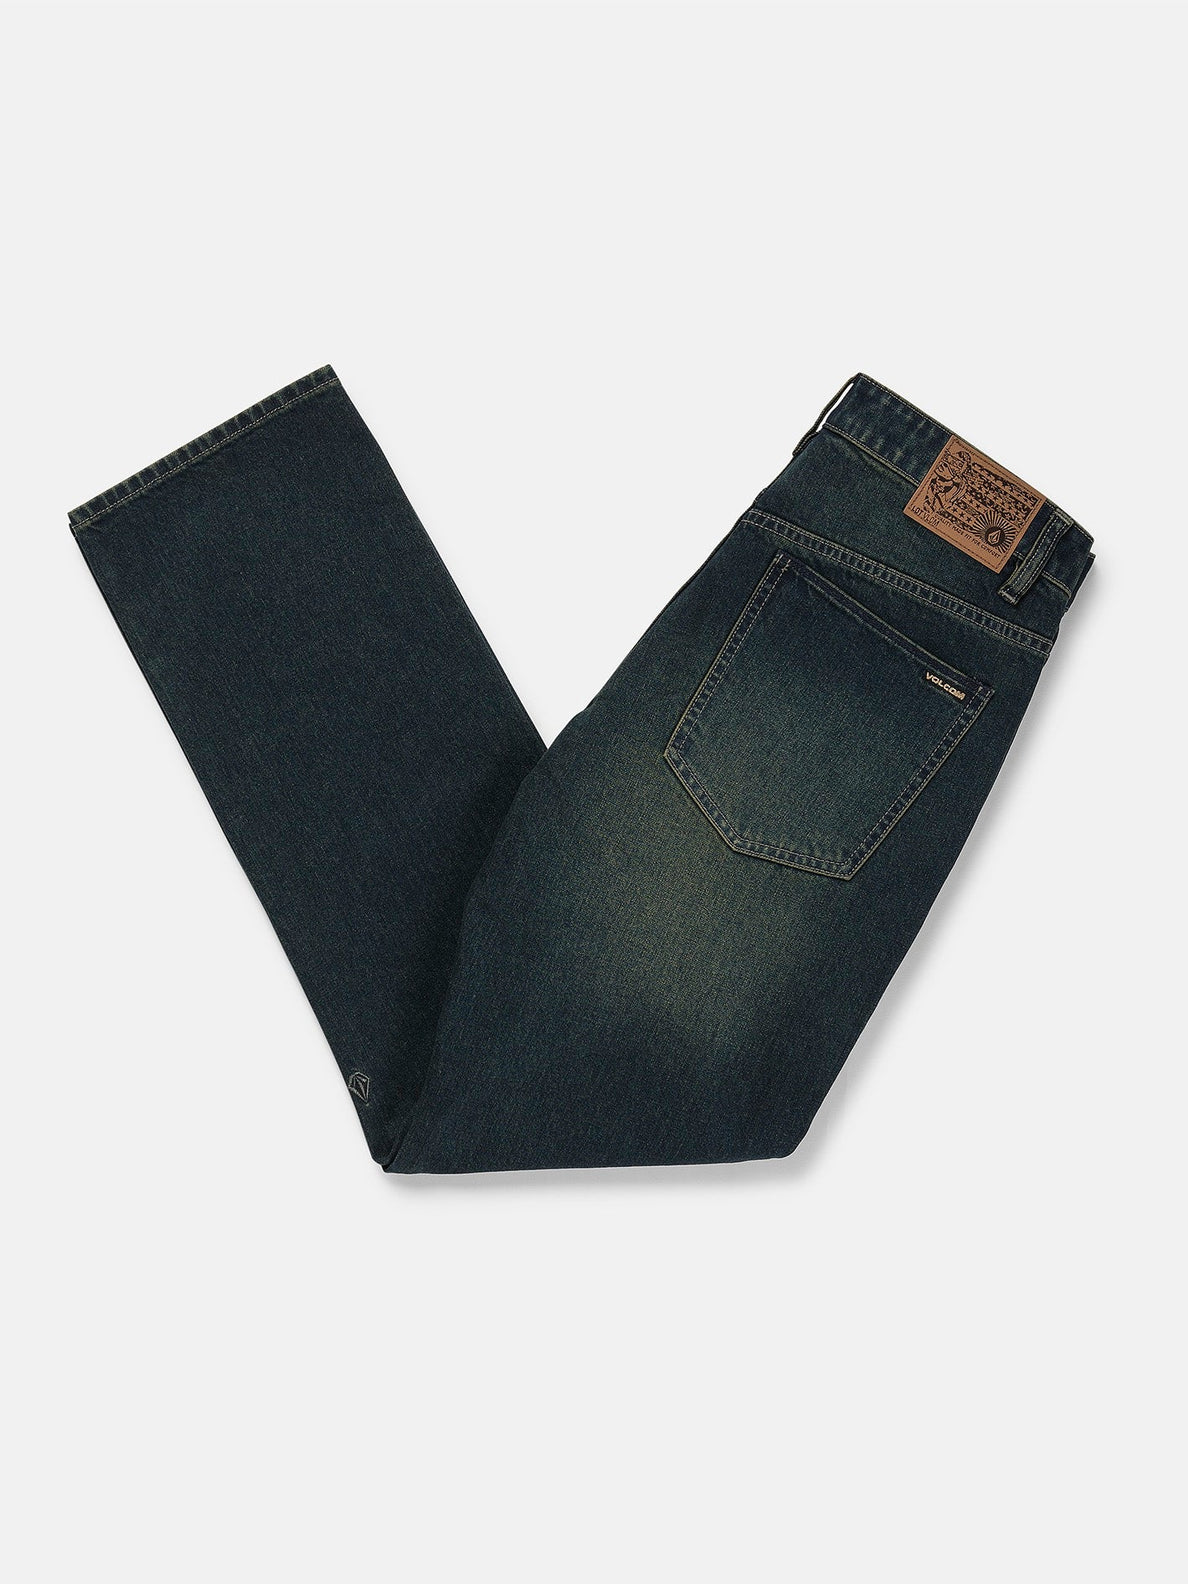 Solver Modern Fit Jeans - Old Blackboard